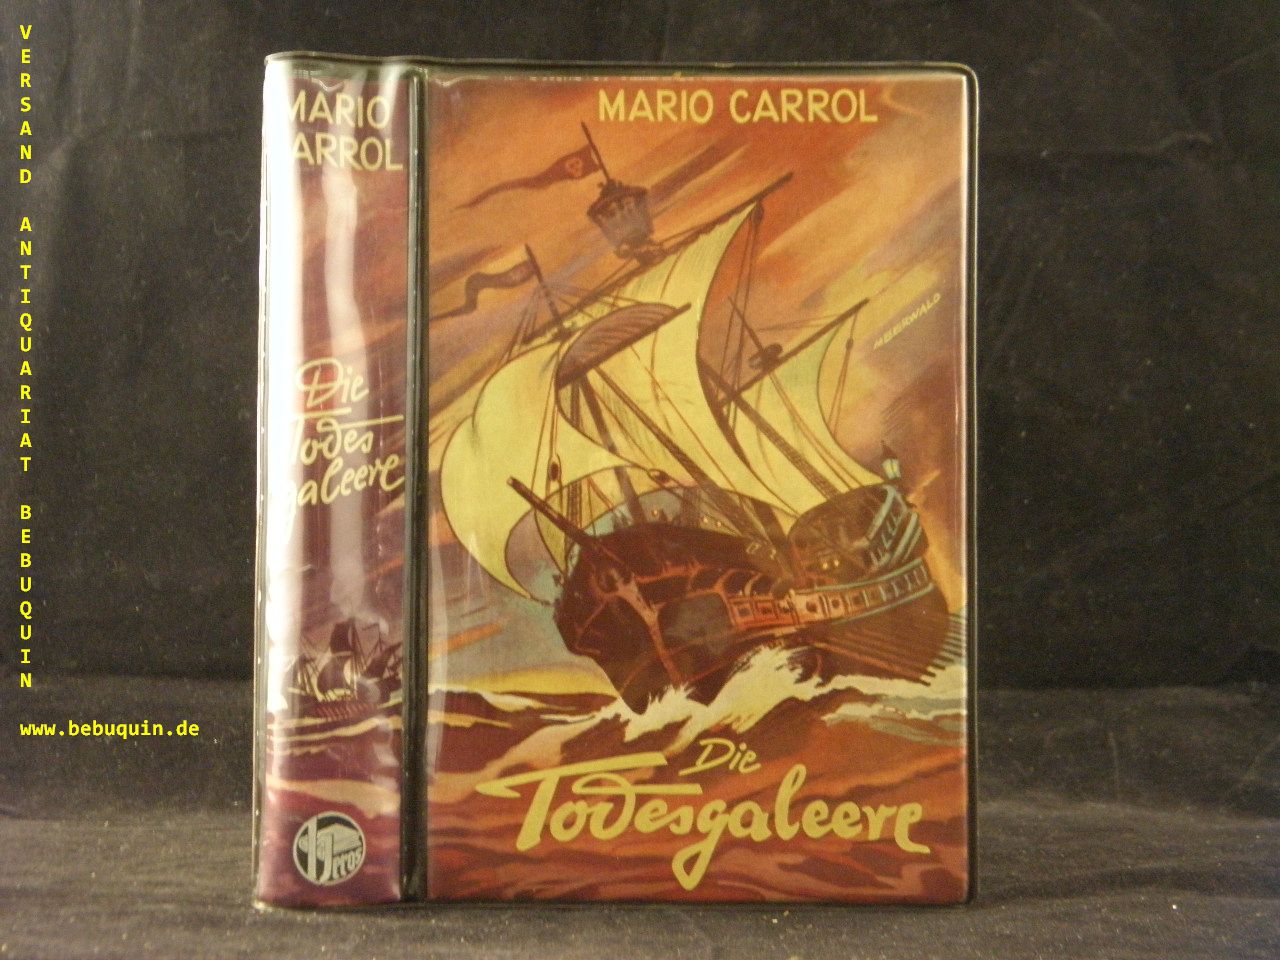 CARROL, Mario: - Die Todesgaleere. Piratenroman.